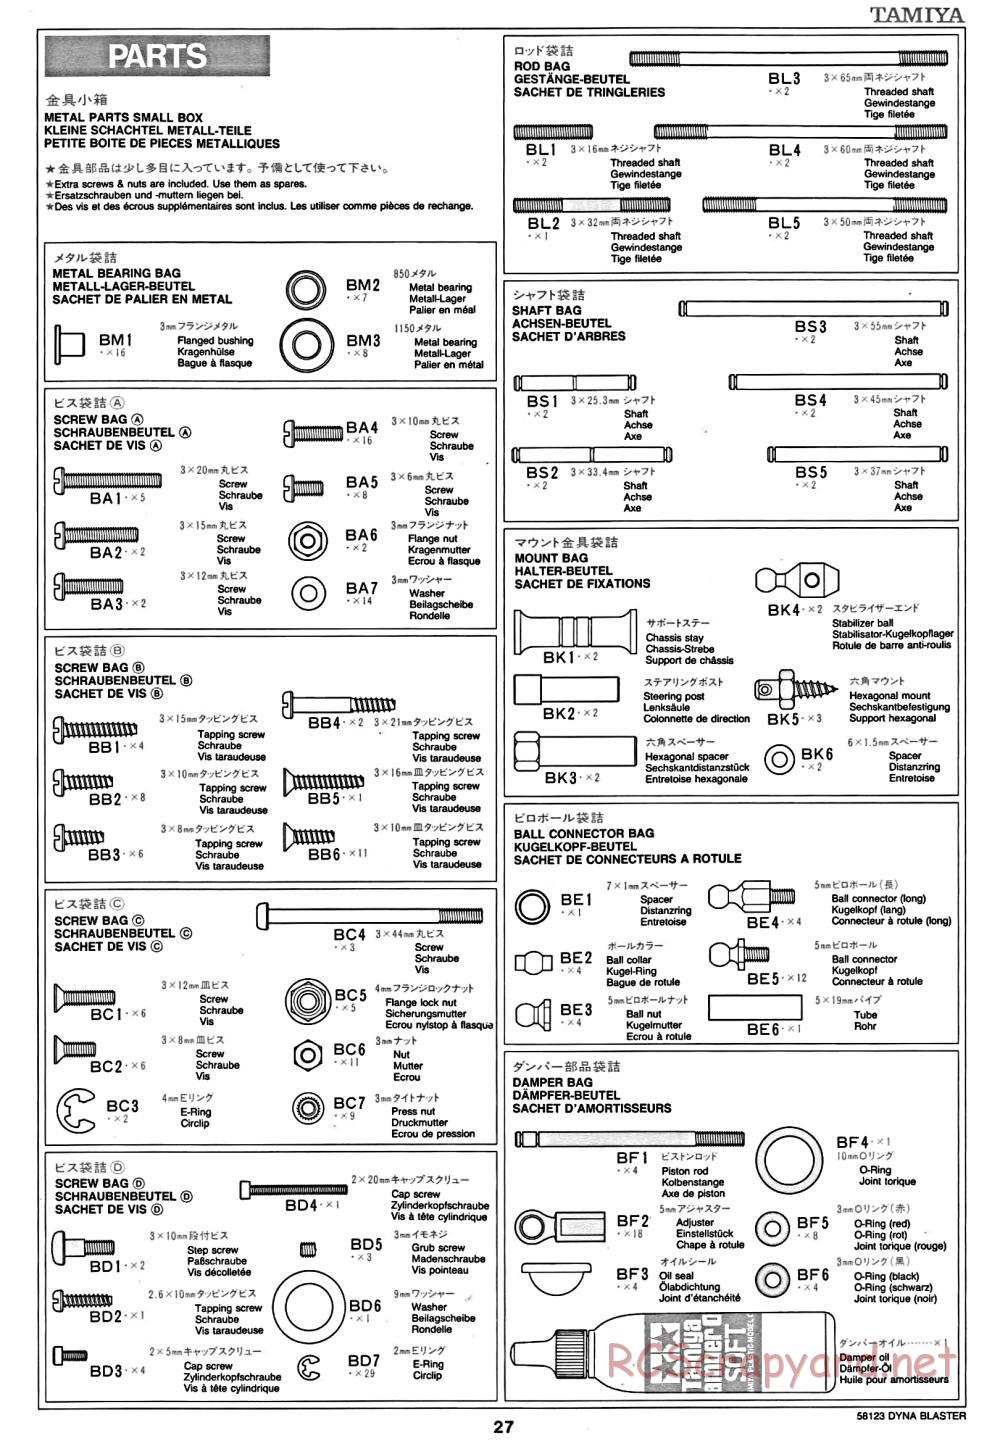 Tamiya - Dyna Blaster Chassis - Manual - Page 27